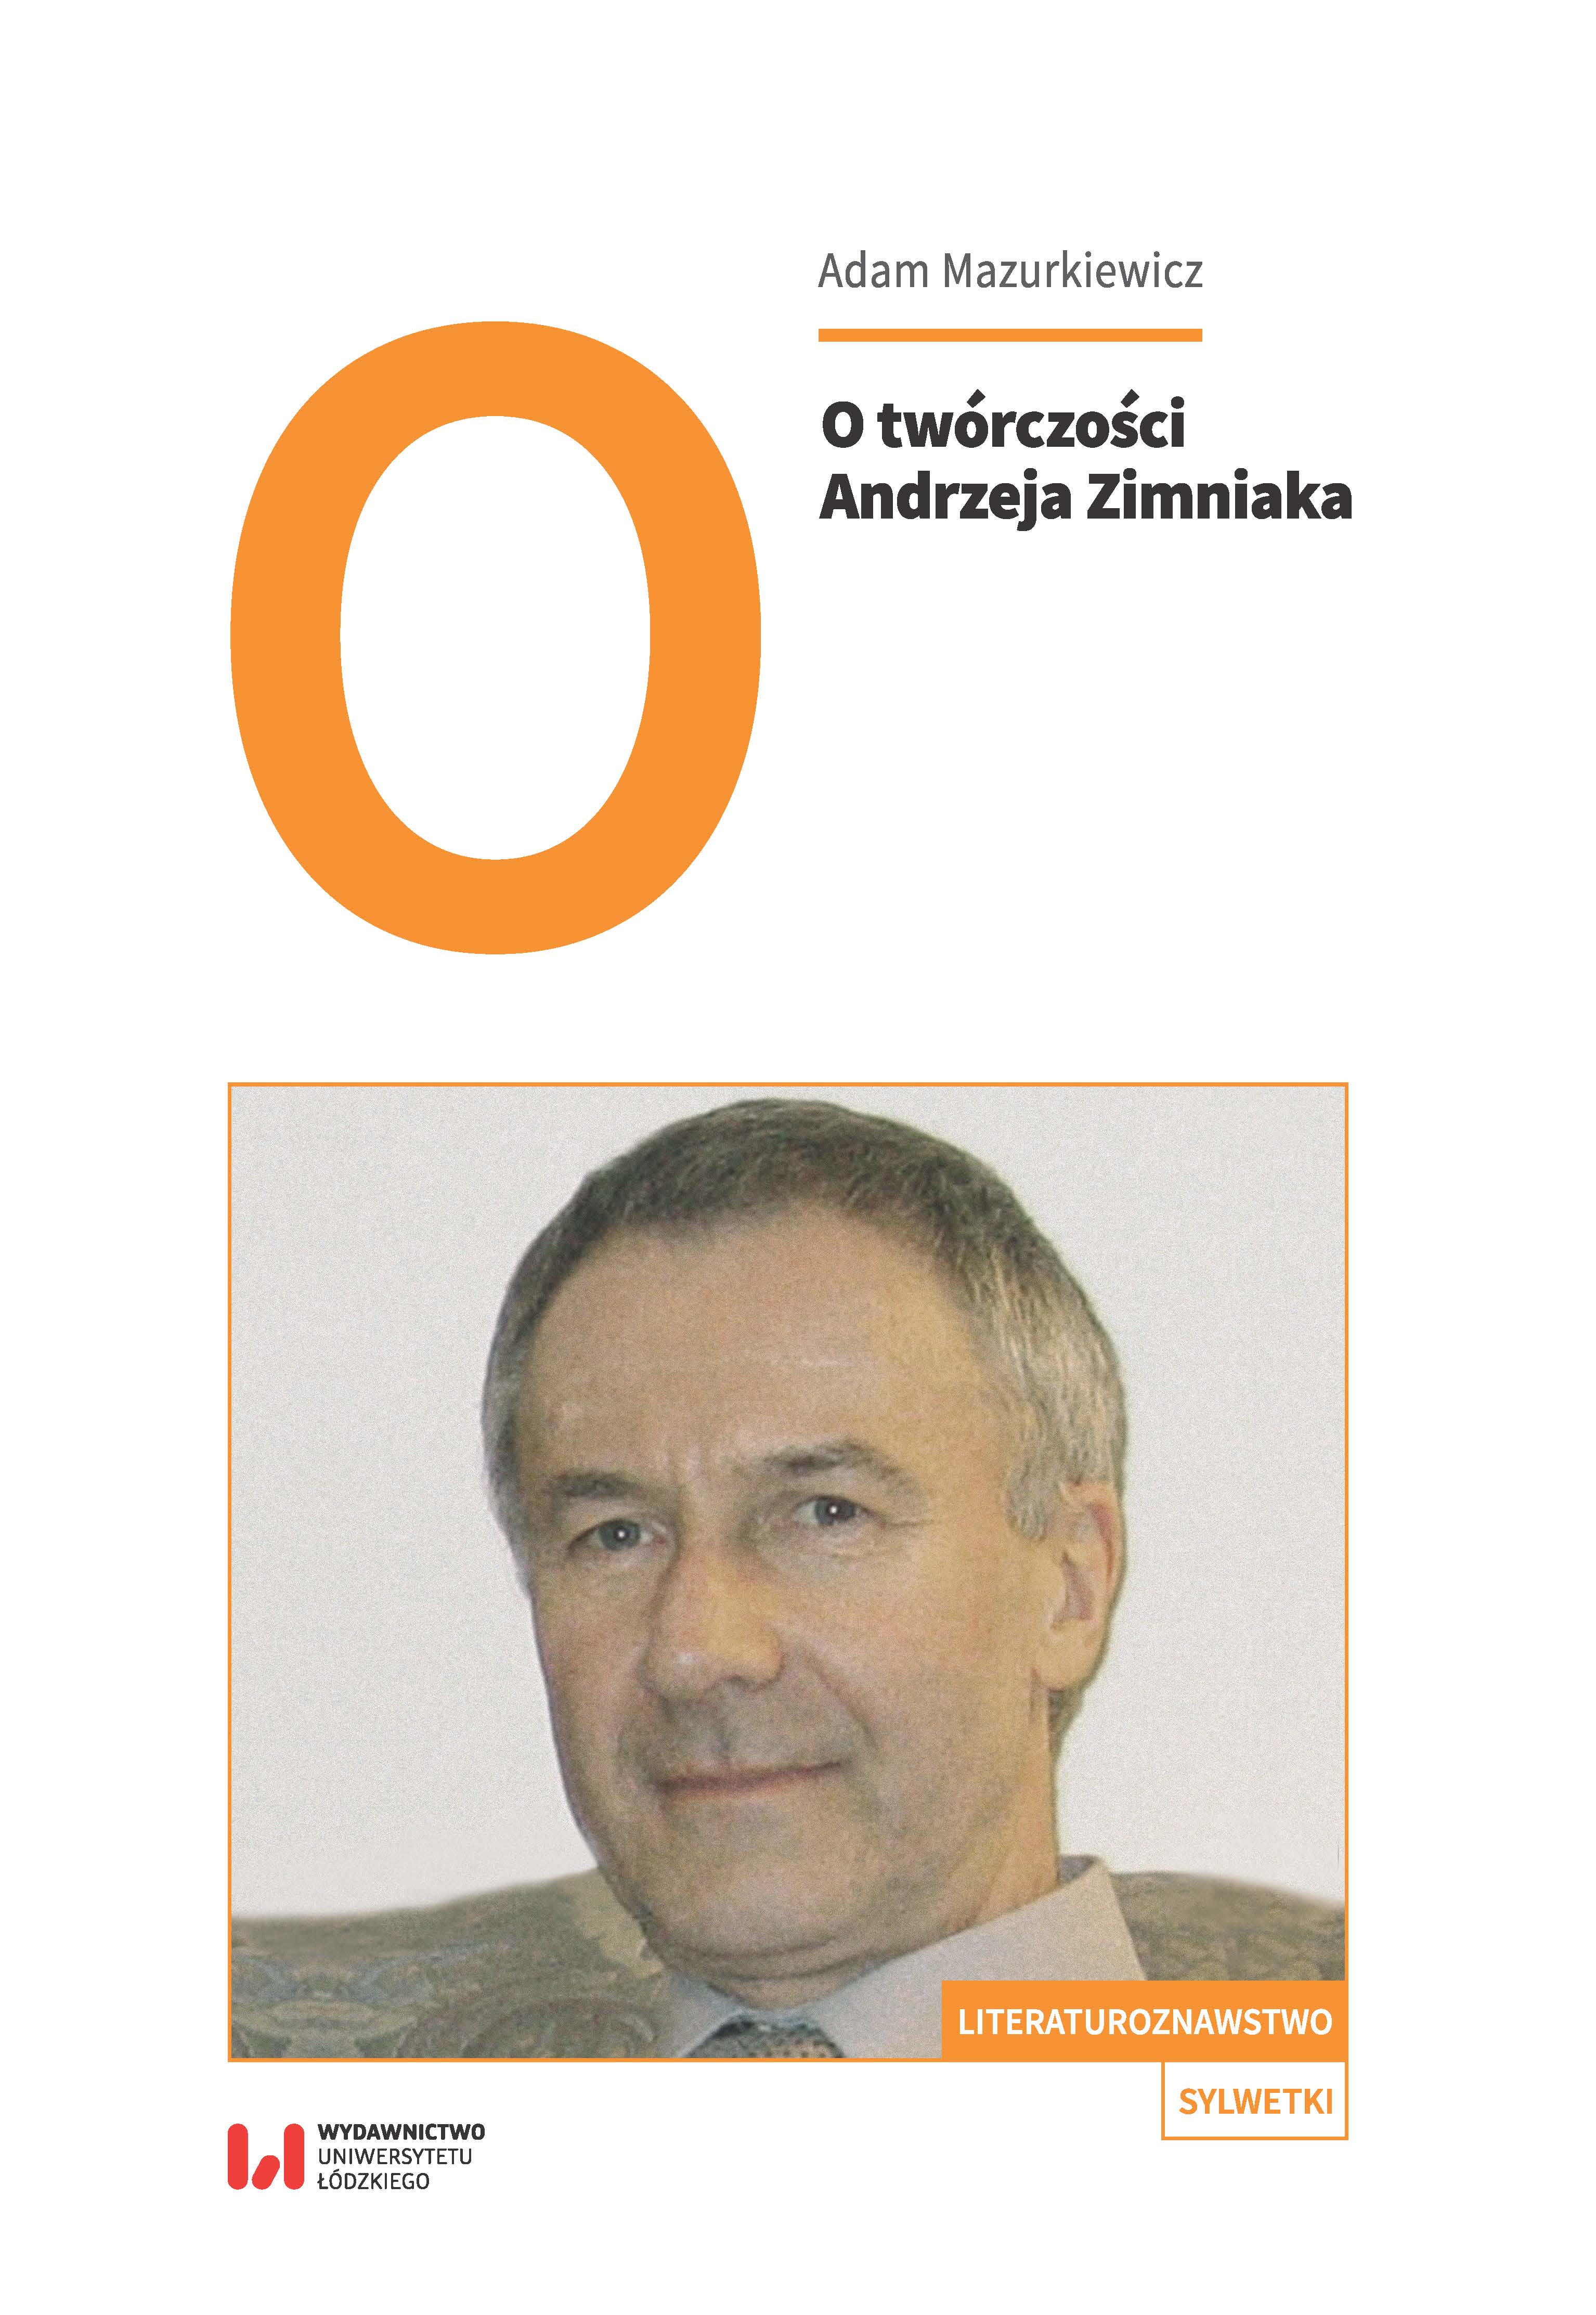 On the output of Andrzej Zimniak